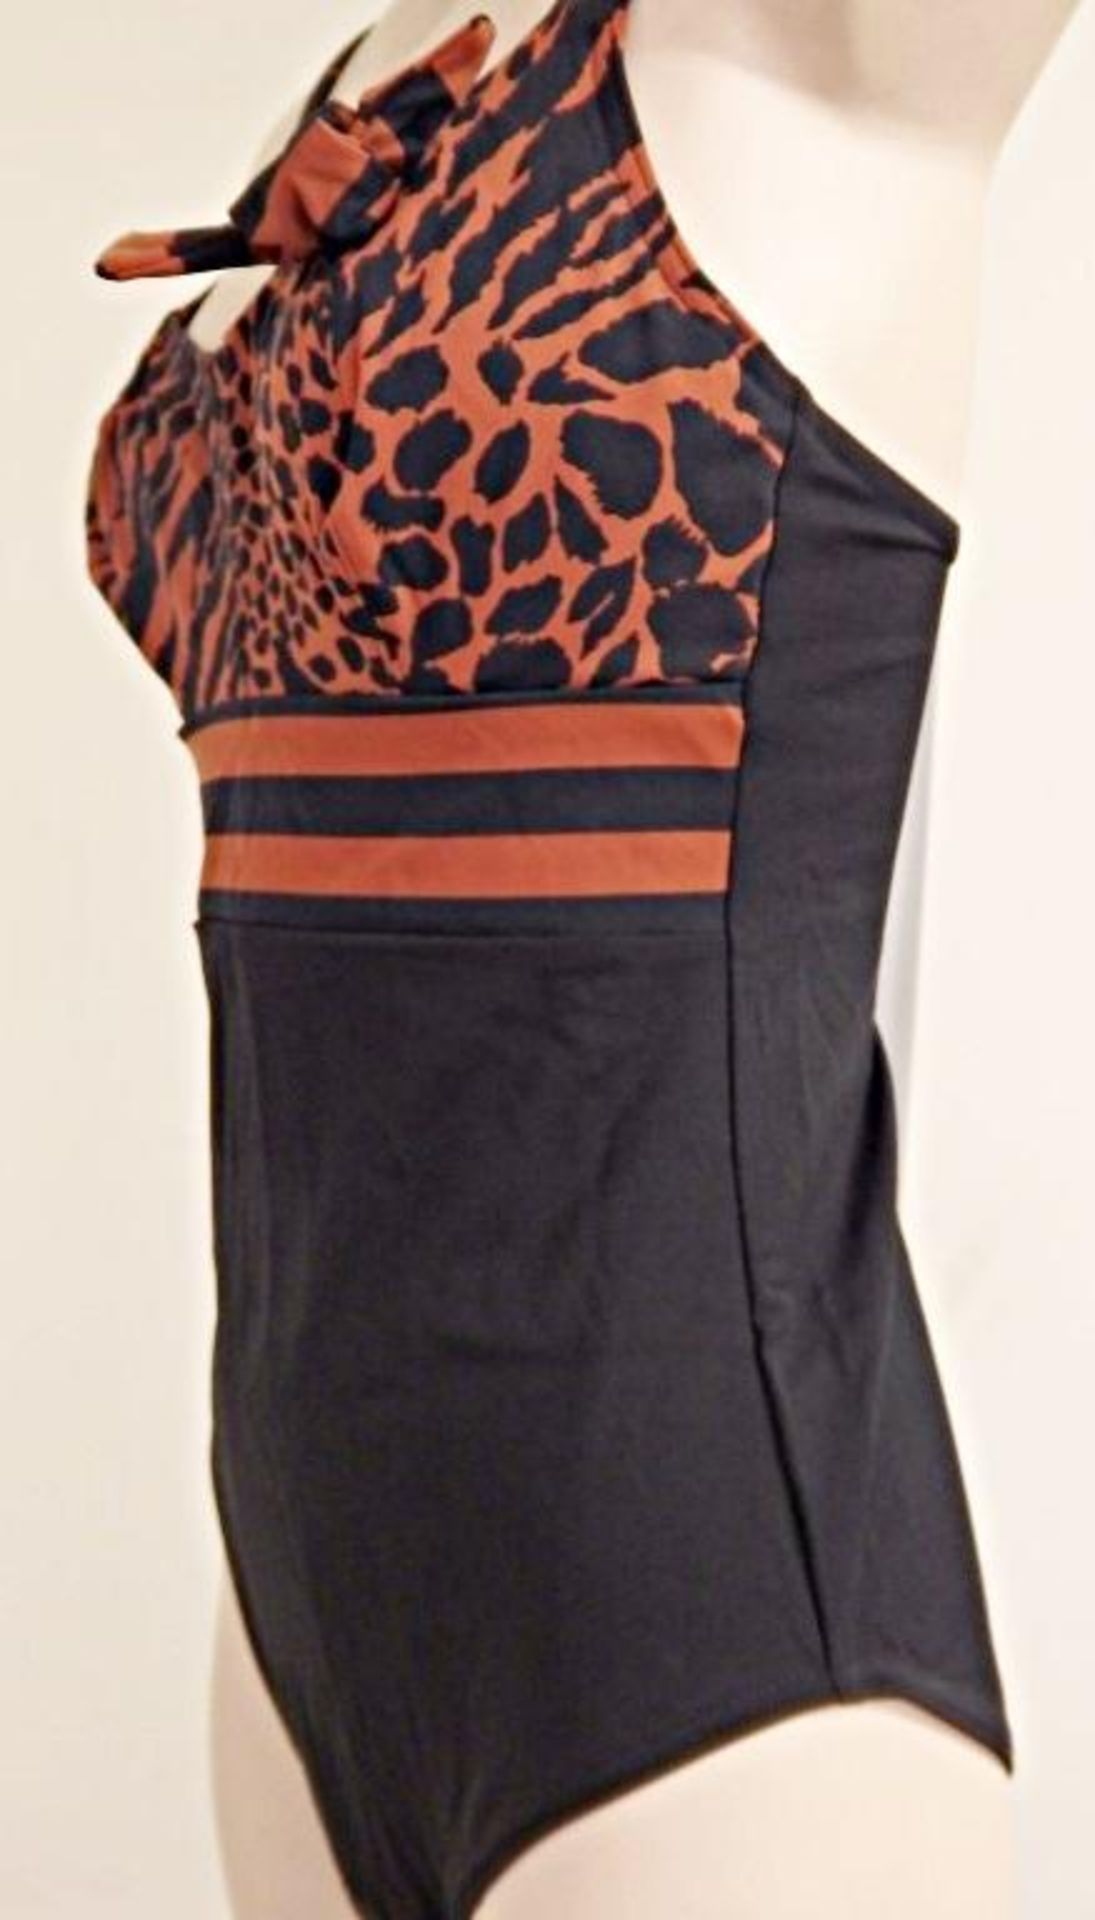 1 x Rasurel - Black/Tan Leopard and Stripe - Bahia Swimsuit - R21235 - Size 2C - UK 32 - Fr 85 - EU - Image 5 of 7